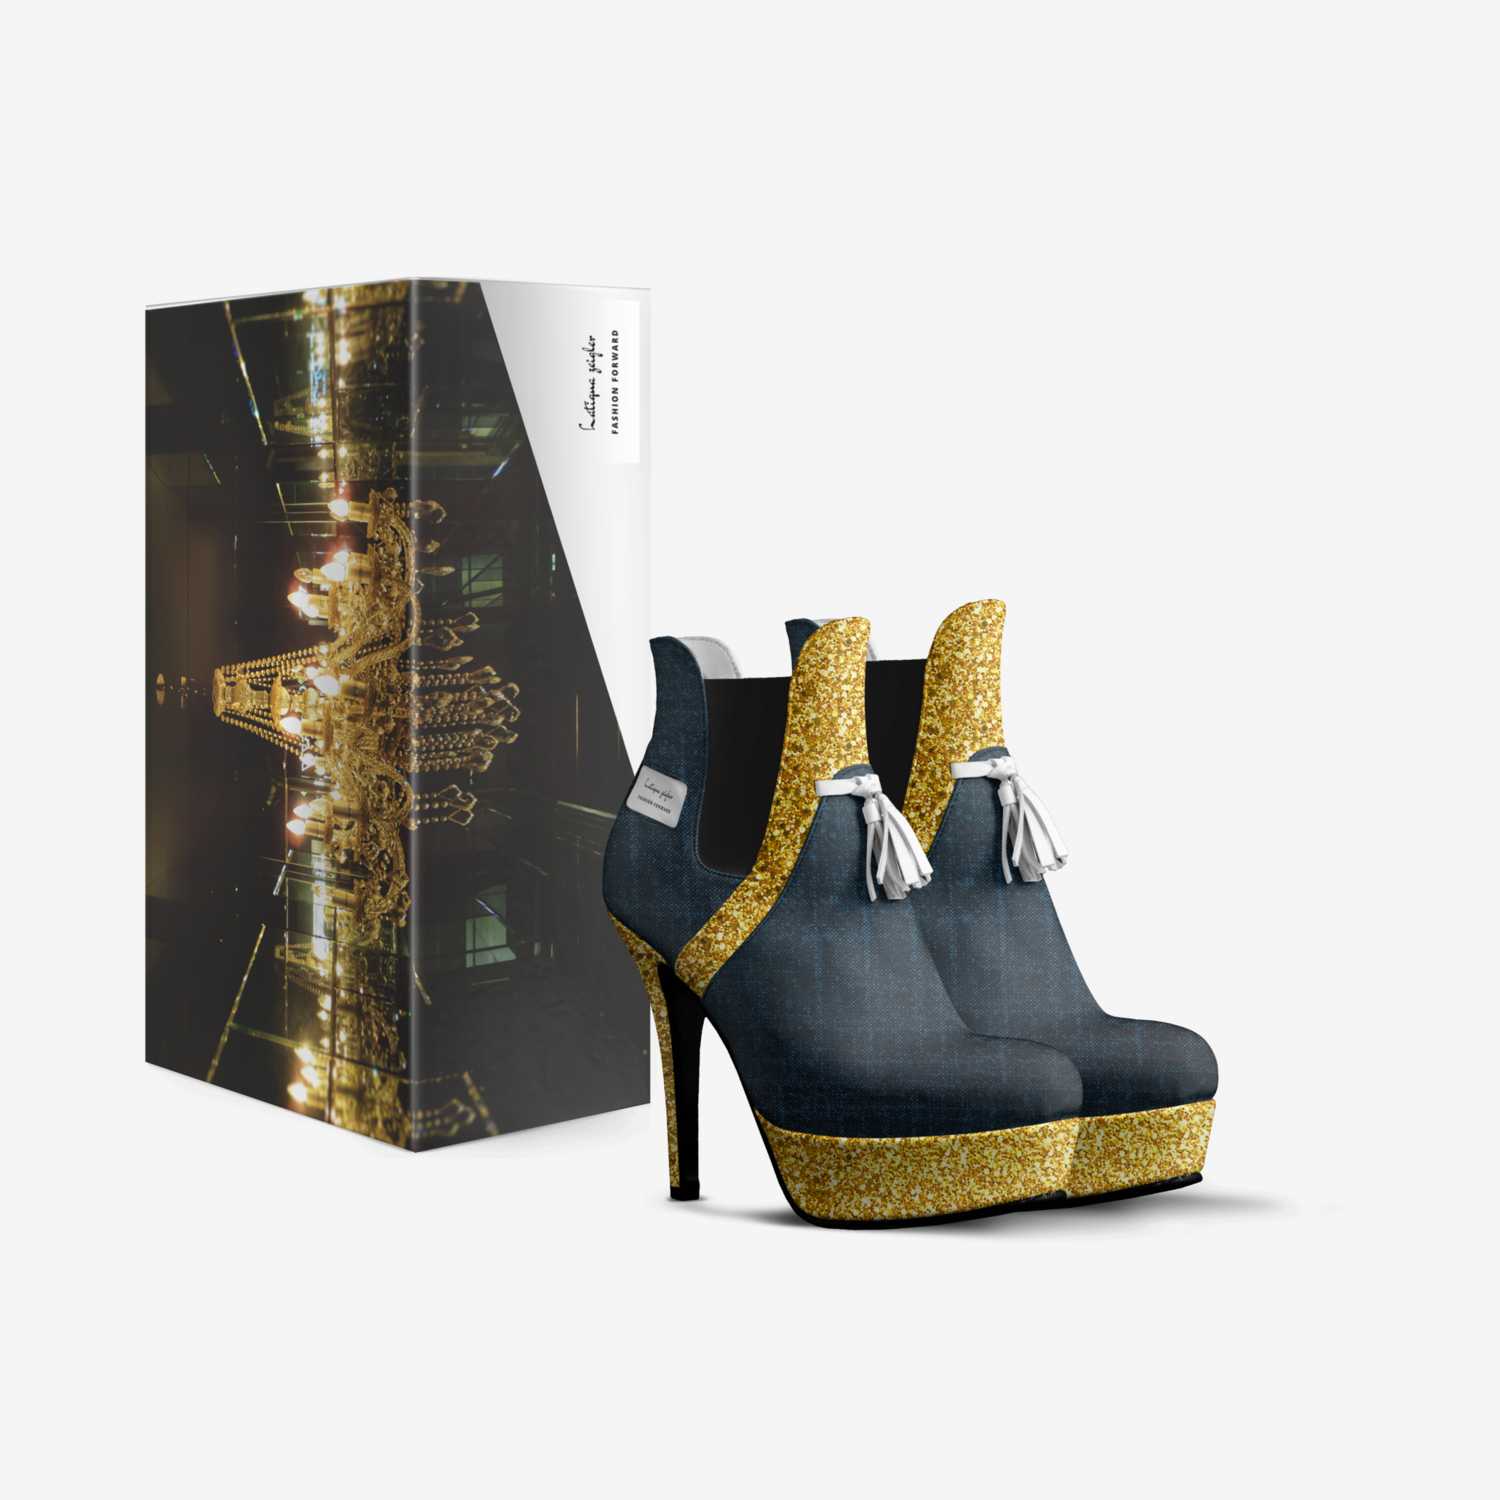 Latiqua zeigler  custom made in Italy shoes by Latiqua Zeigler | Box view